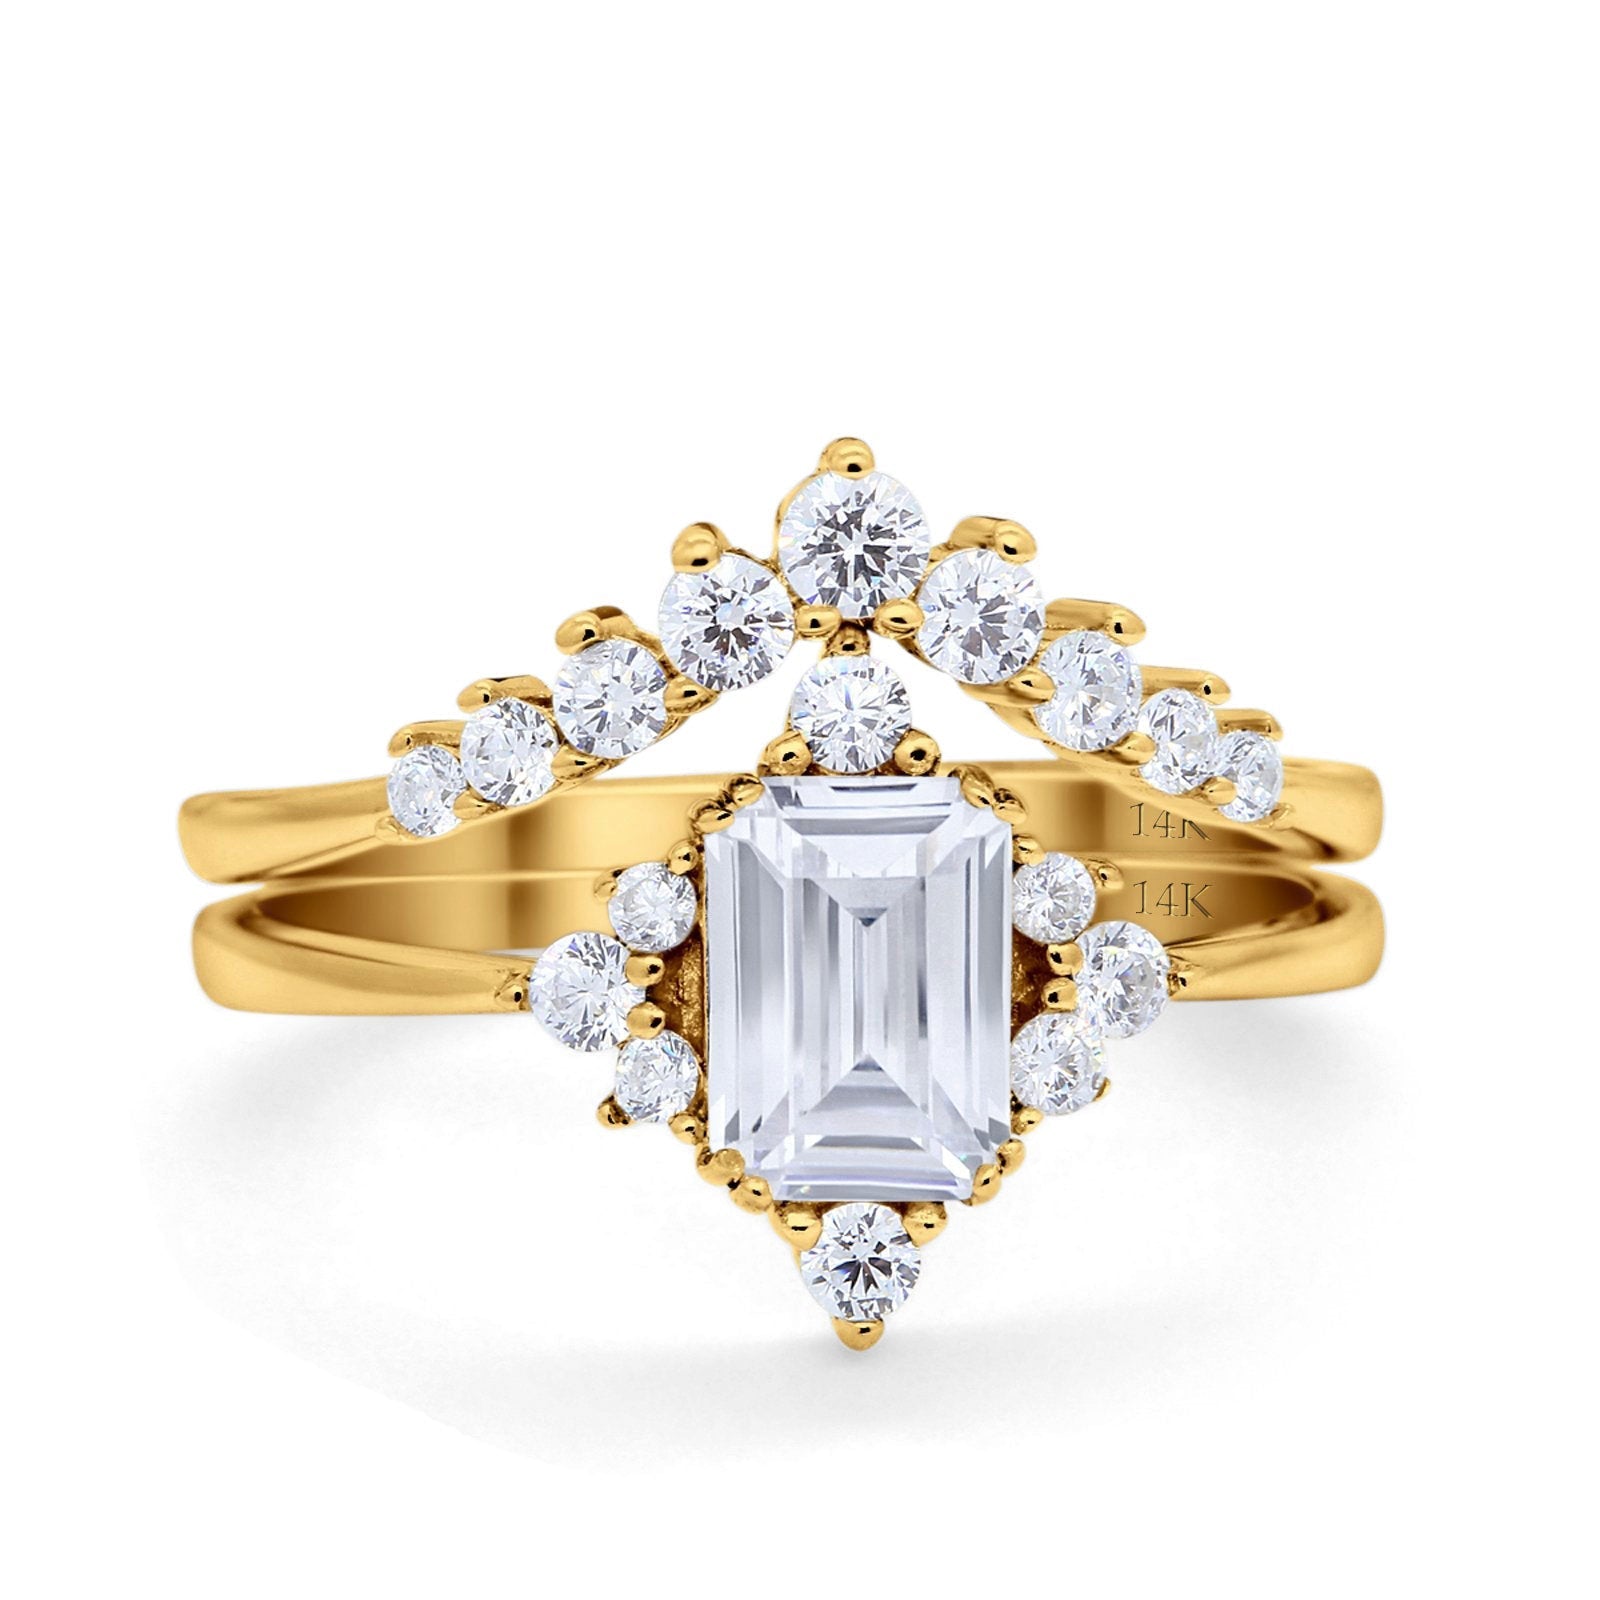 14K Gold Emerald Cut Shape Art Deco Two Piece Bridal Set Ring Engagement Band Simulated CZ